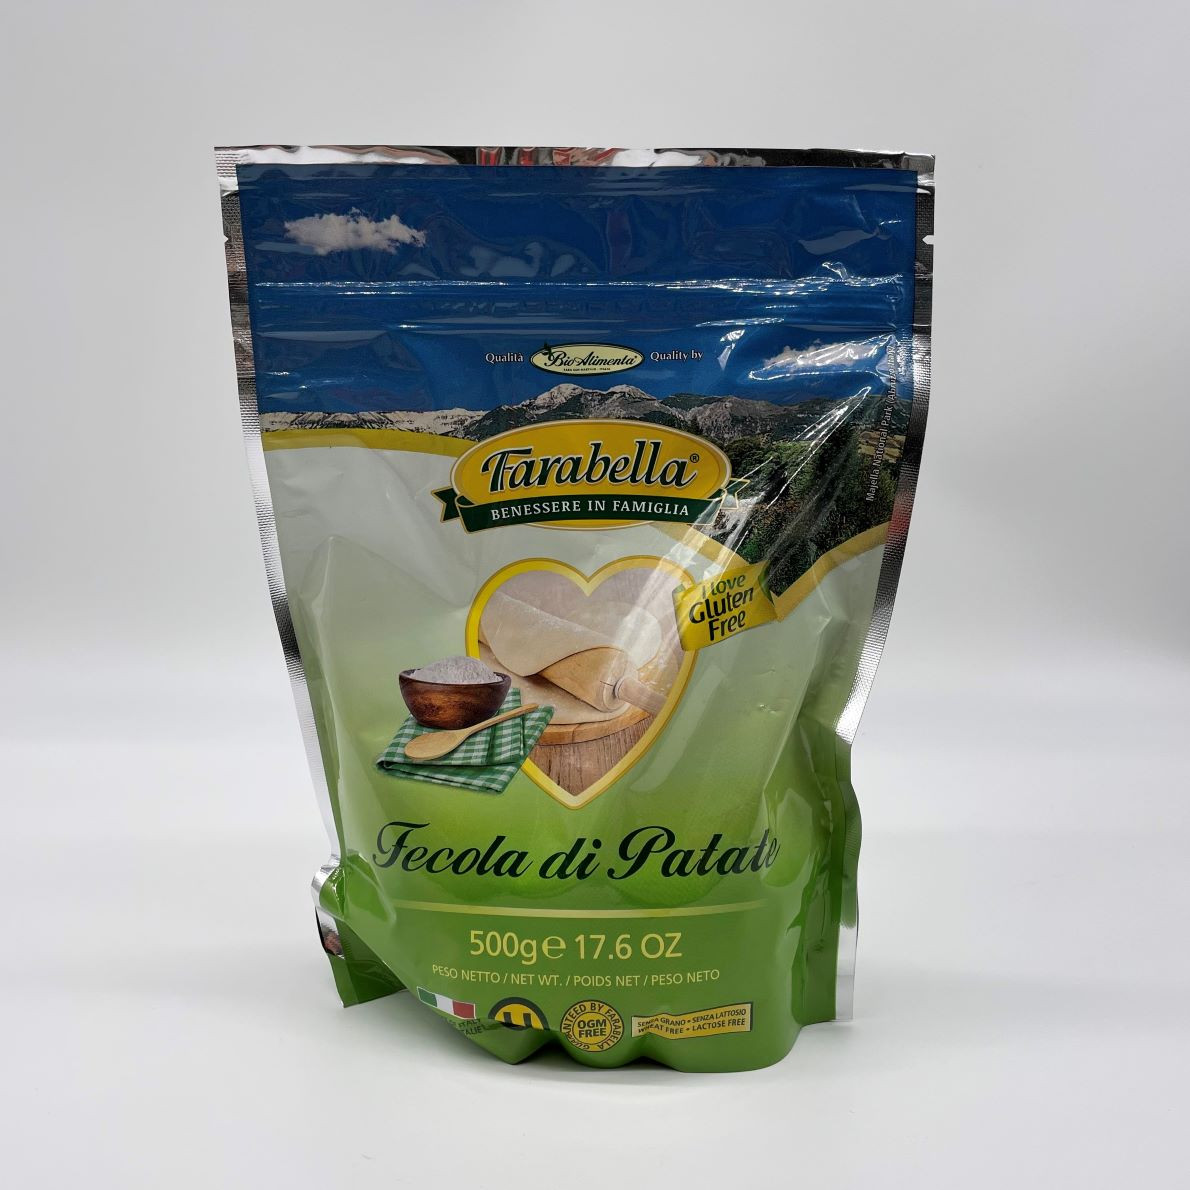 Farabella Fecola di Patate, 500g Senza Glutine Shop Online